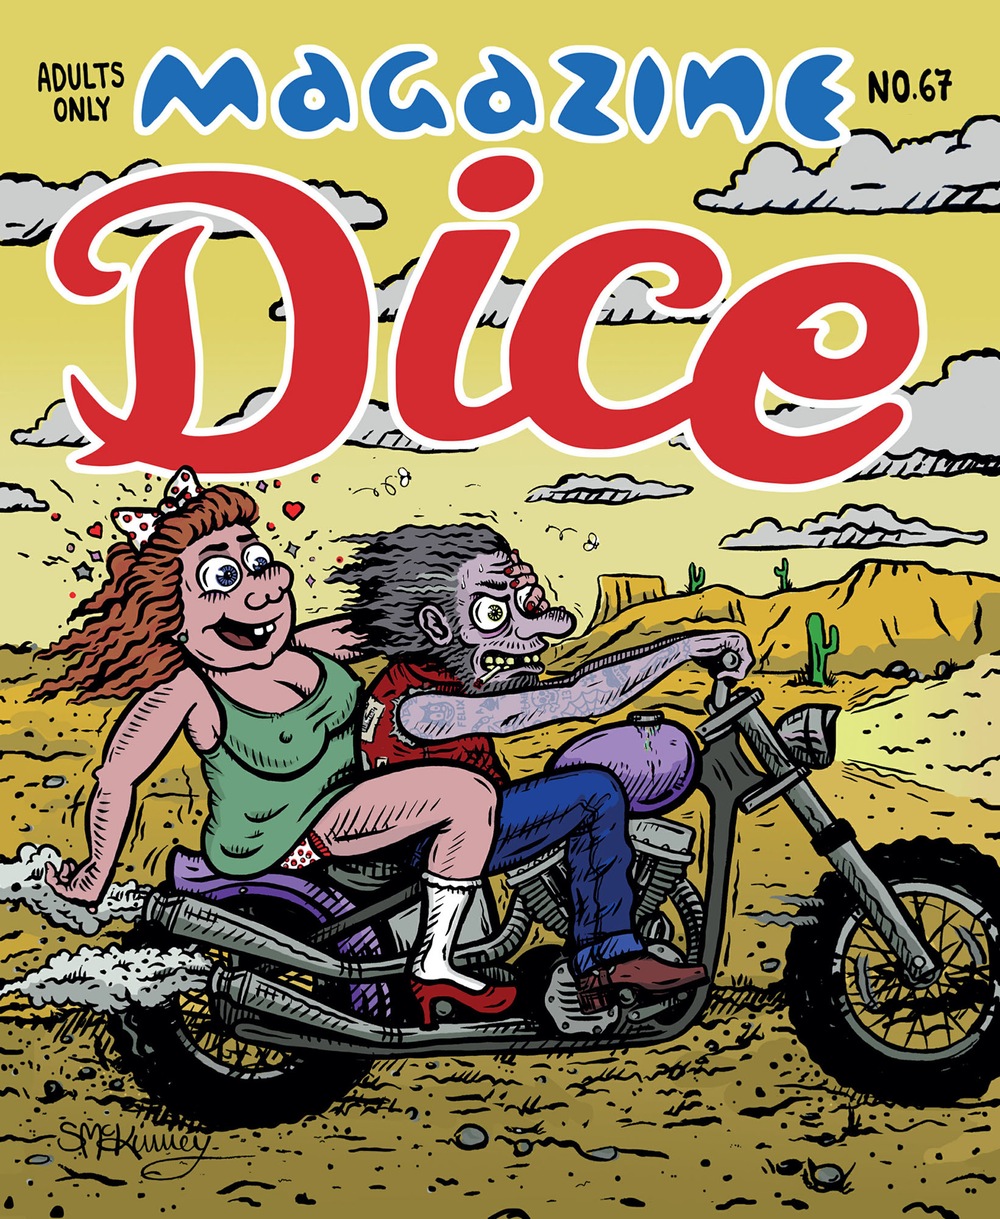 dice-issue-67